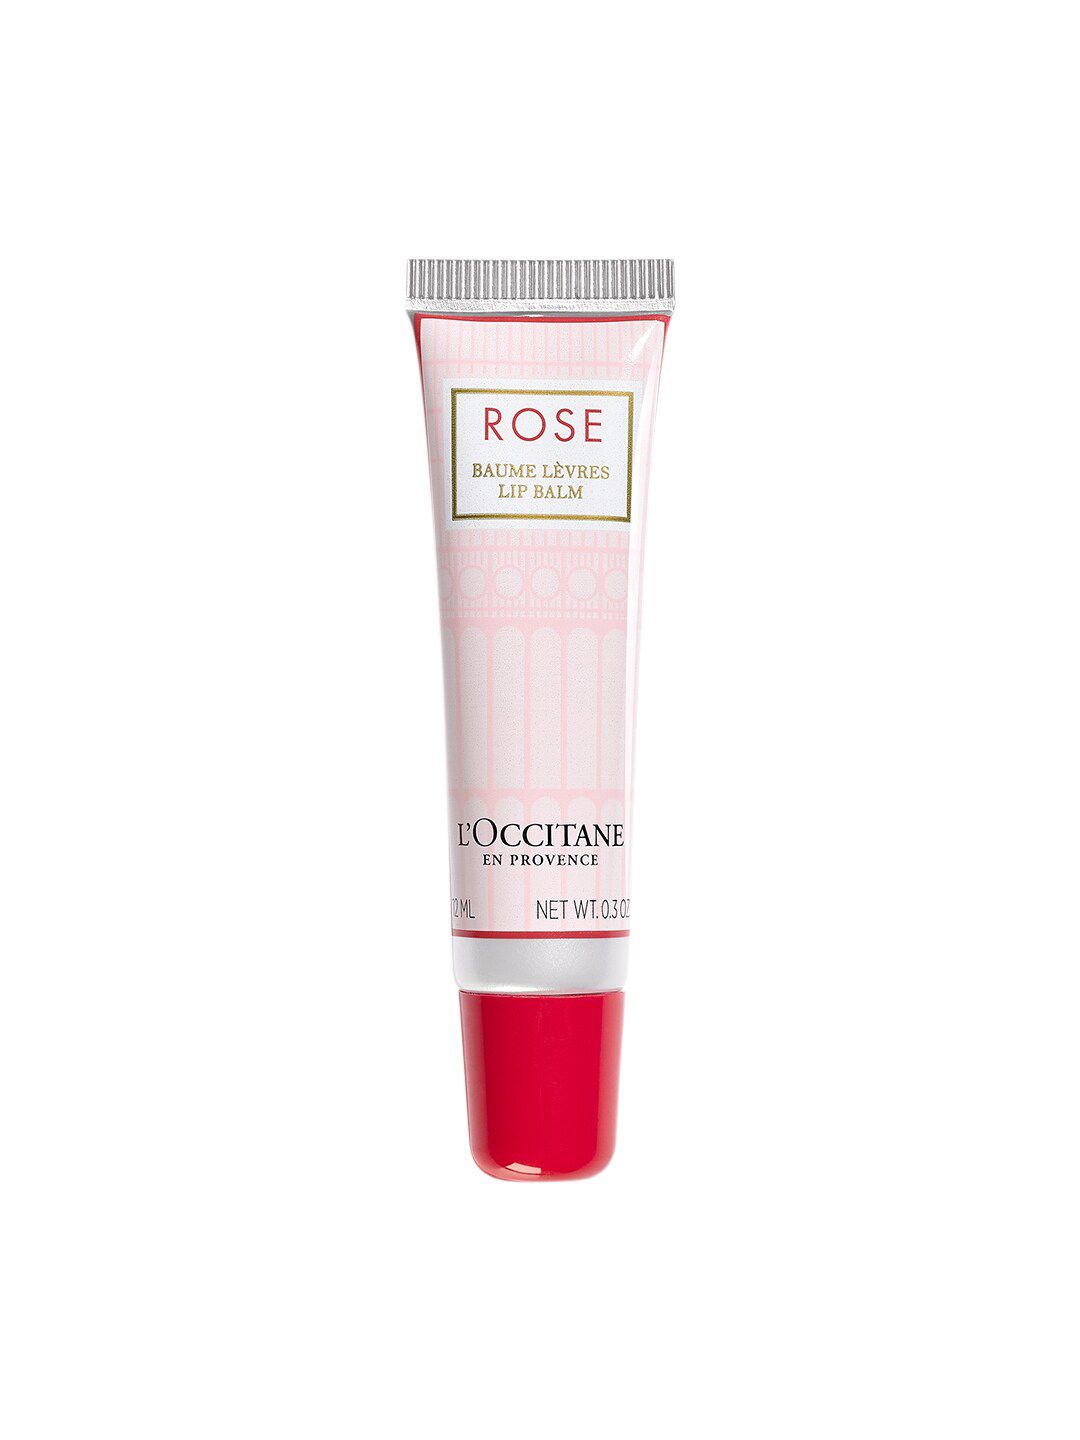 L'Occitane en Provence Rose Lip Balm 12ml Price in India